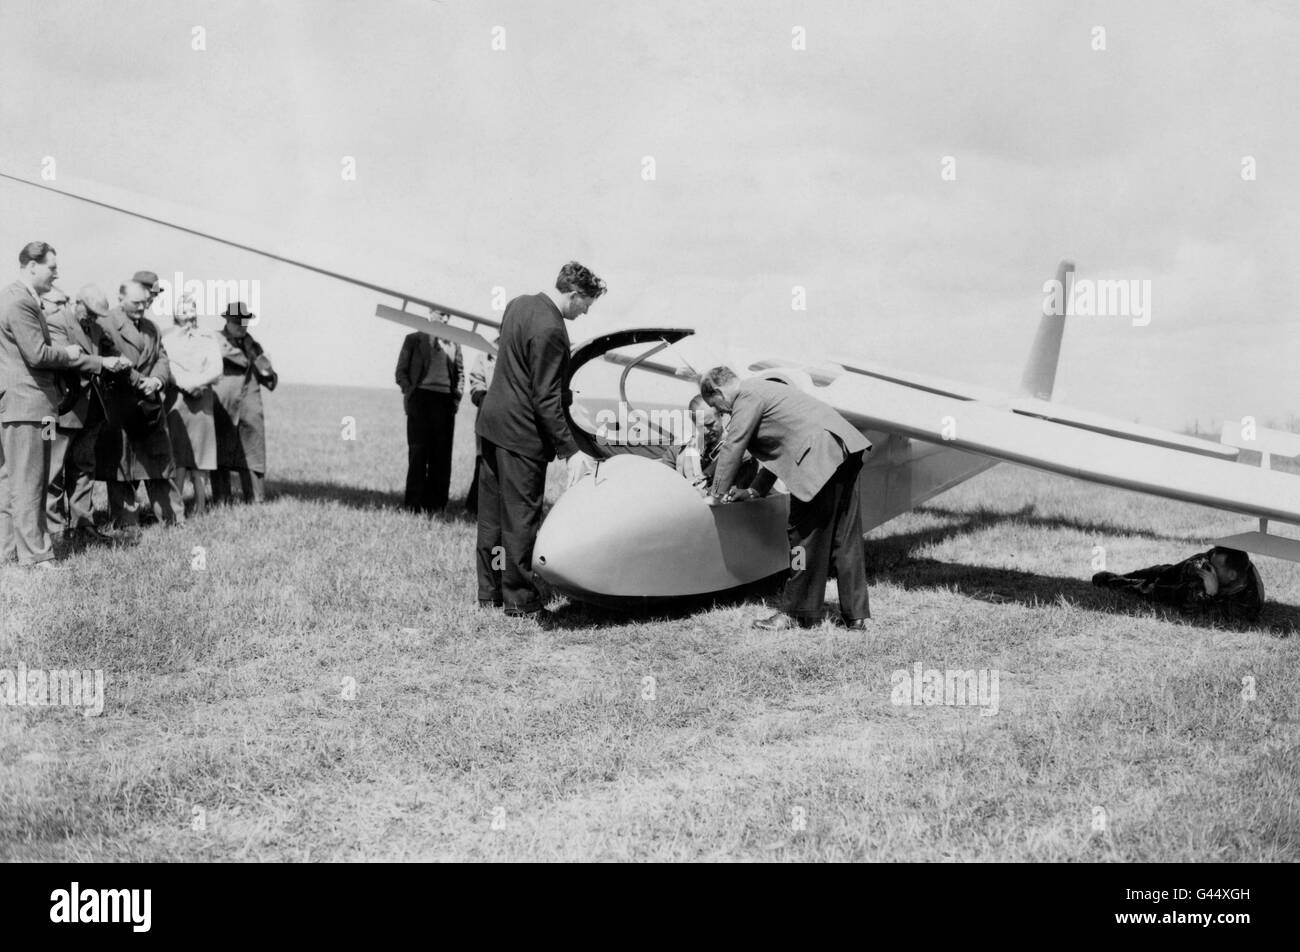 Royalty - Duke of Edinburgh's First Glider Flight - Nympsfield Stock Photo